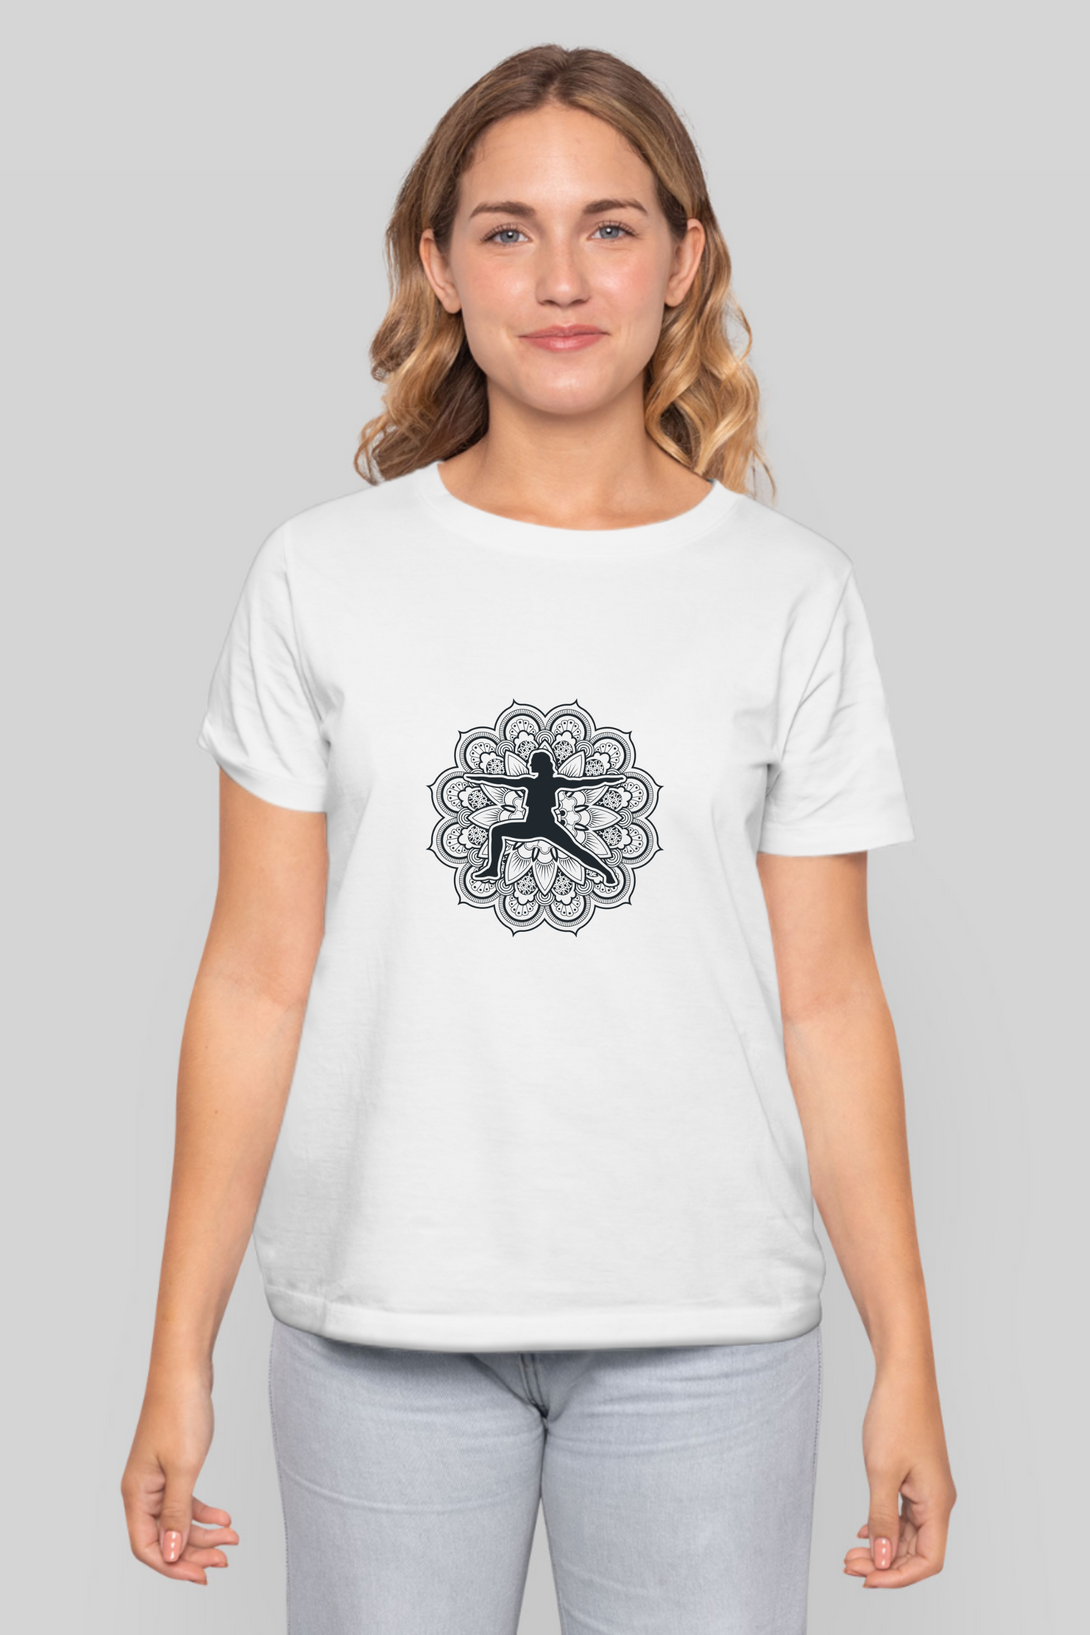 Yoga Pose Mandala Printed T-Shirt For Women - WowWaves - 10